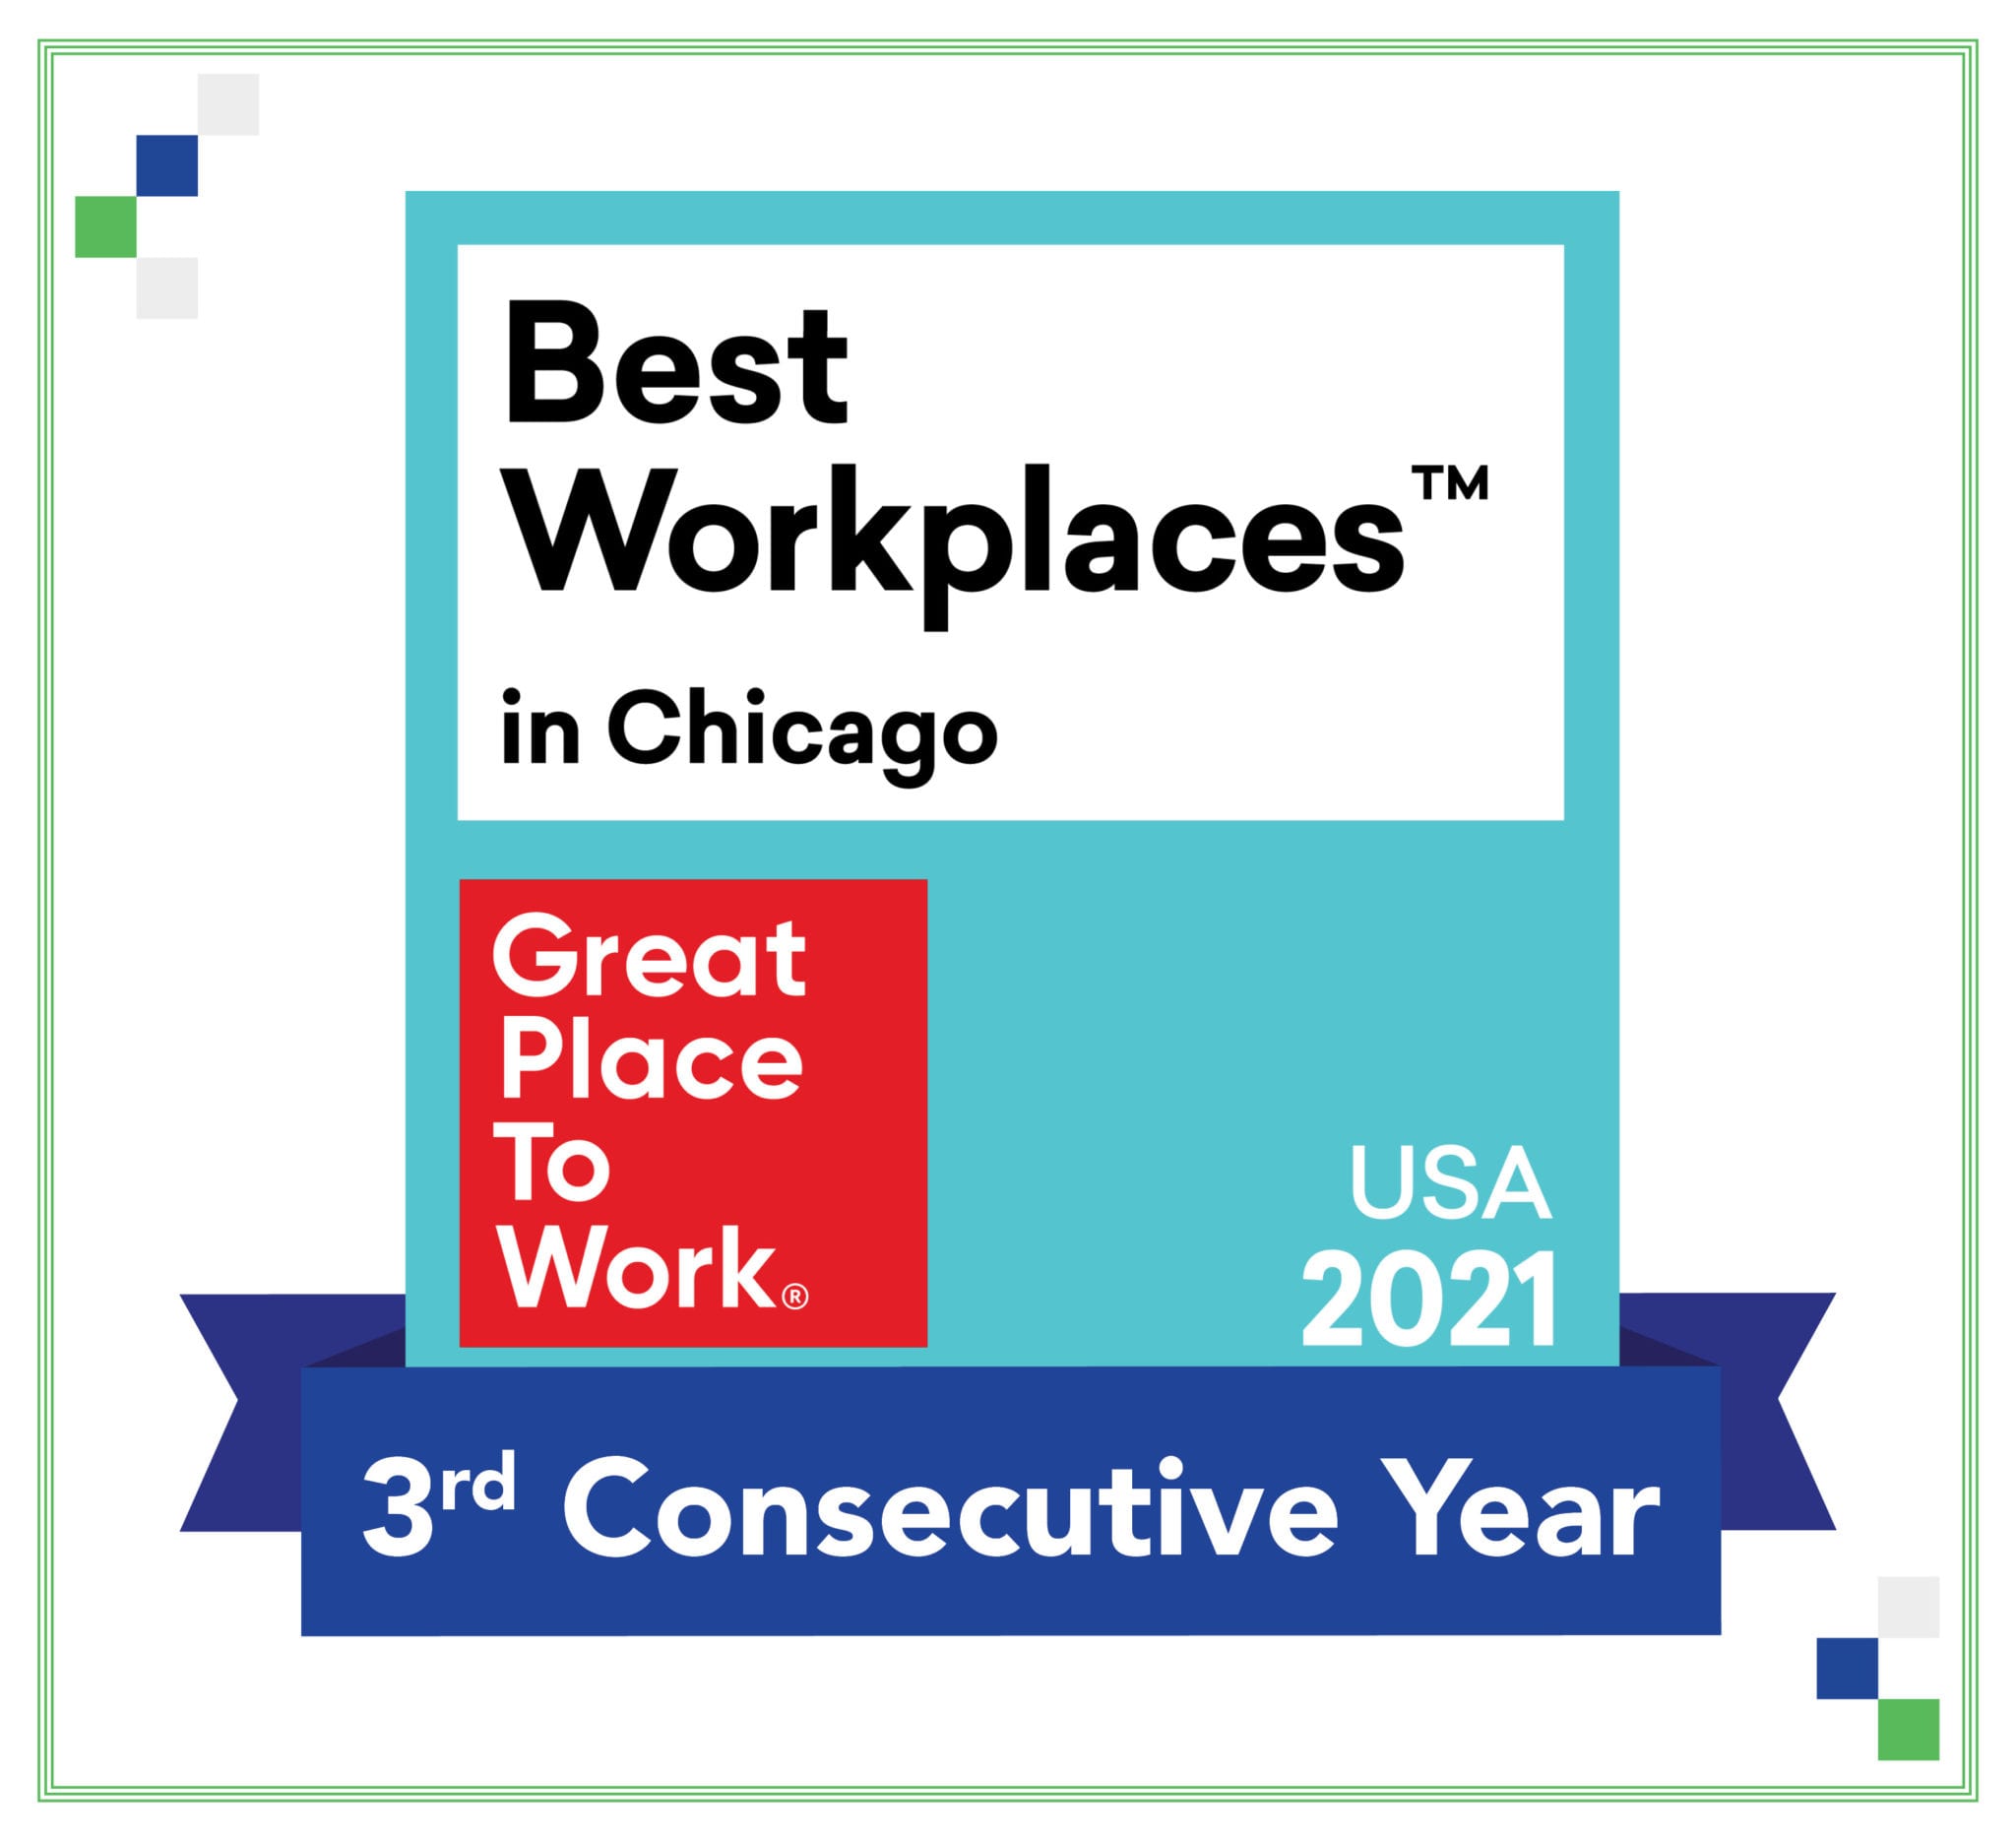 2021 GPTW Best Workplaces in Chicago website